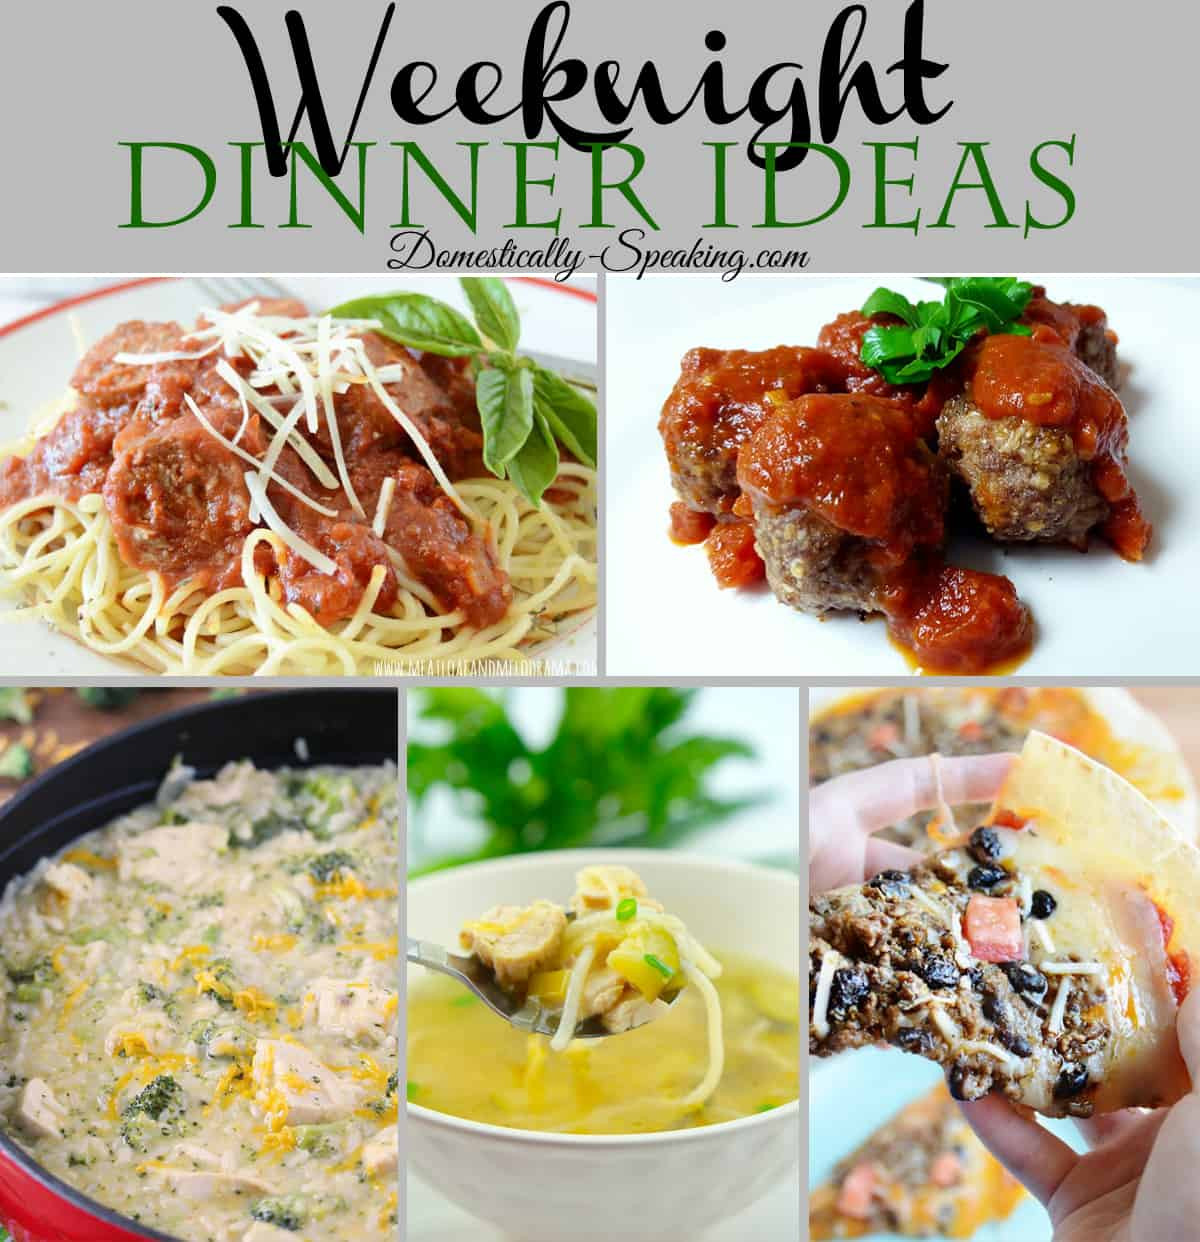 Weeknight Dinner Recipes
 Weeknight Dinner Ideas Domestically Speaking